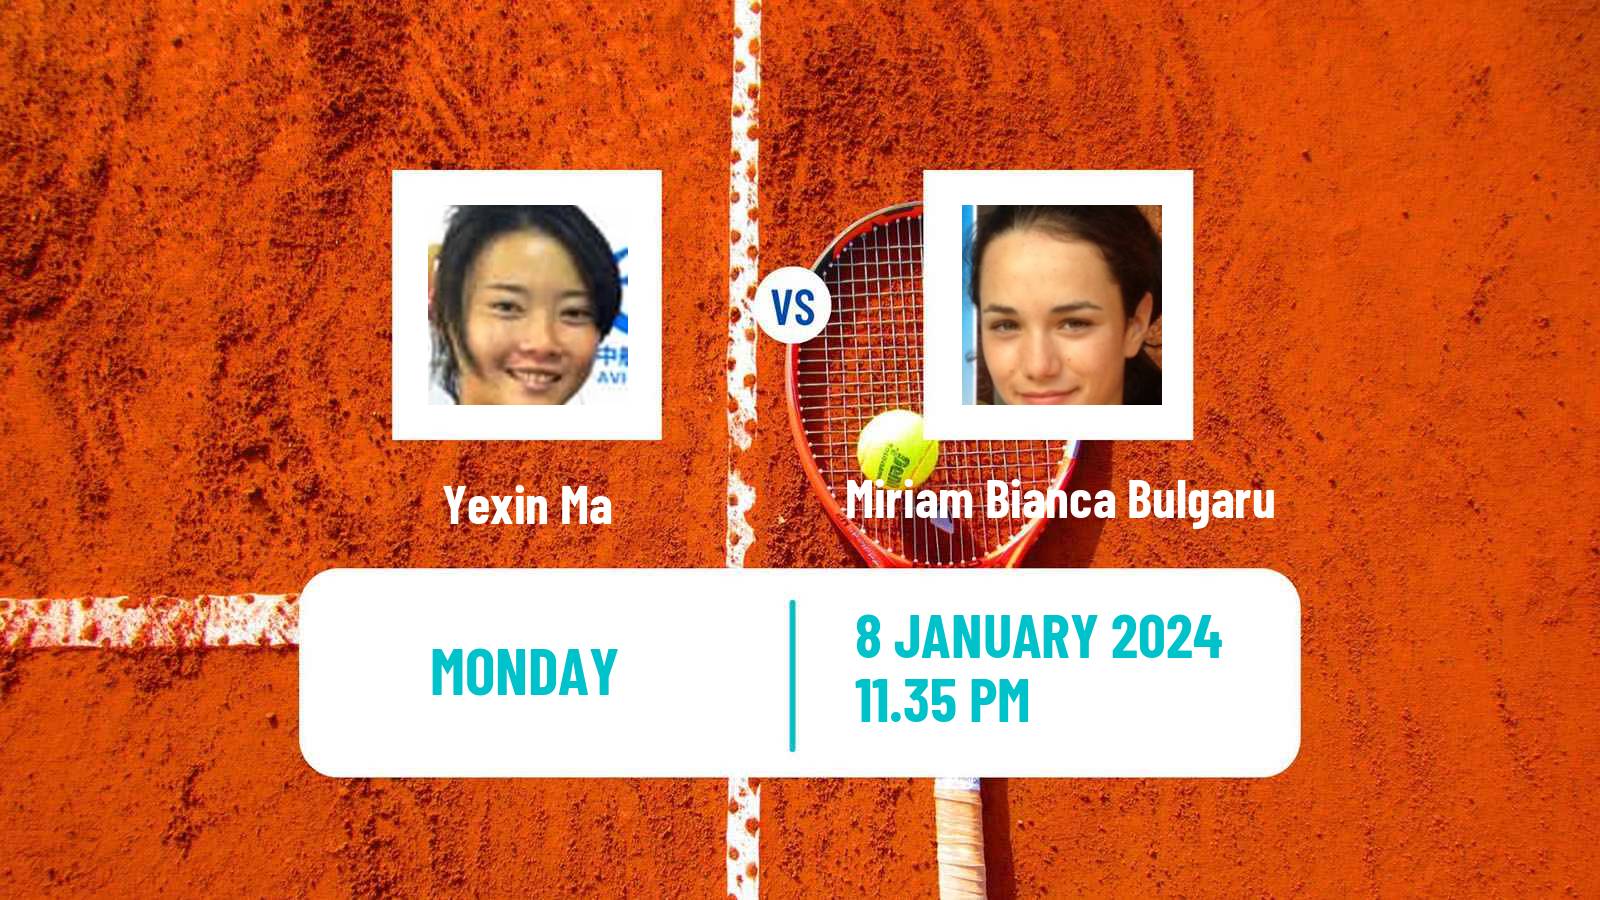 Tennis WTA Australian Open Yexin Ma - Miriam Bianca Bulgaru